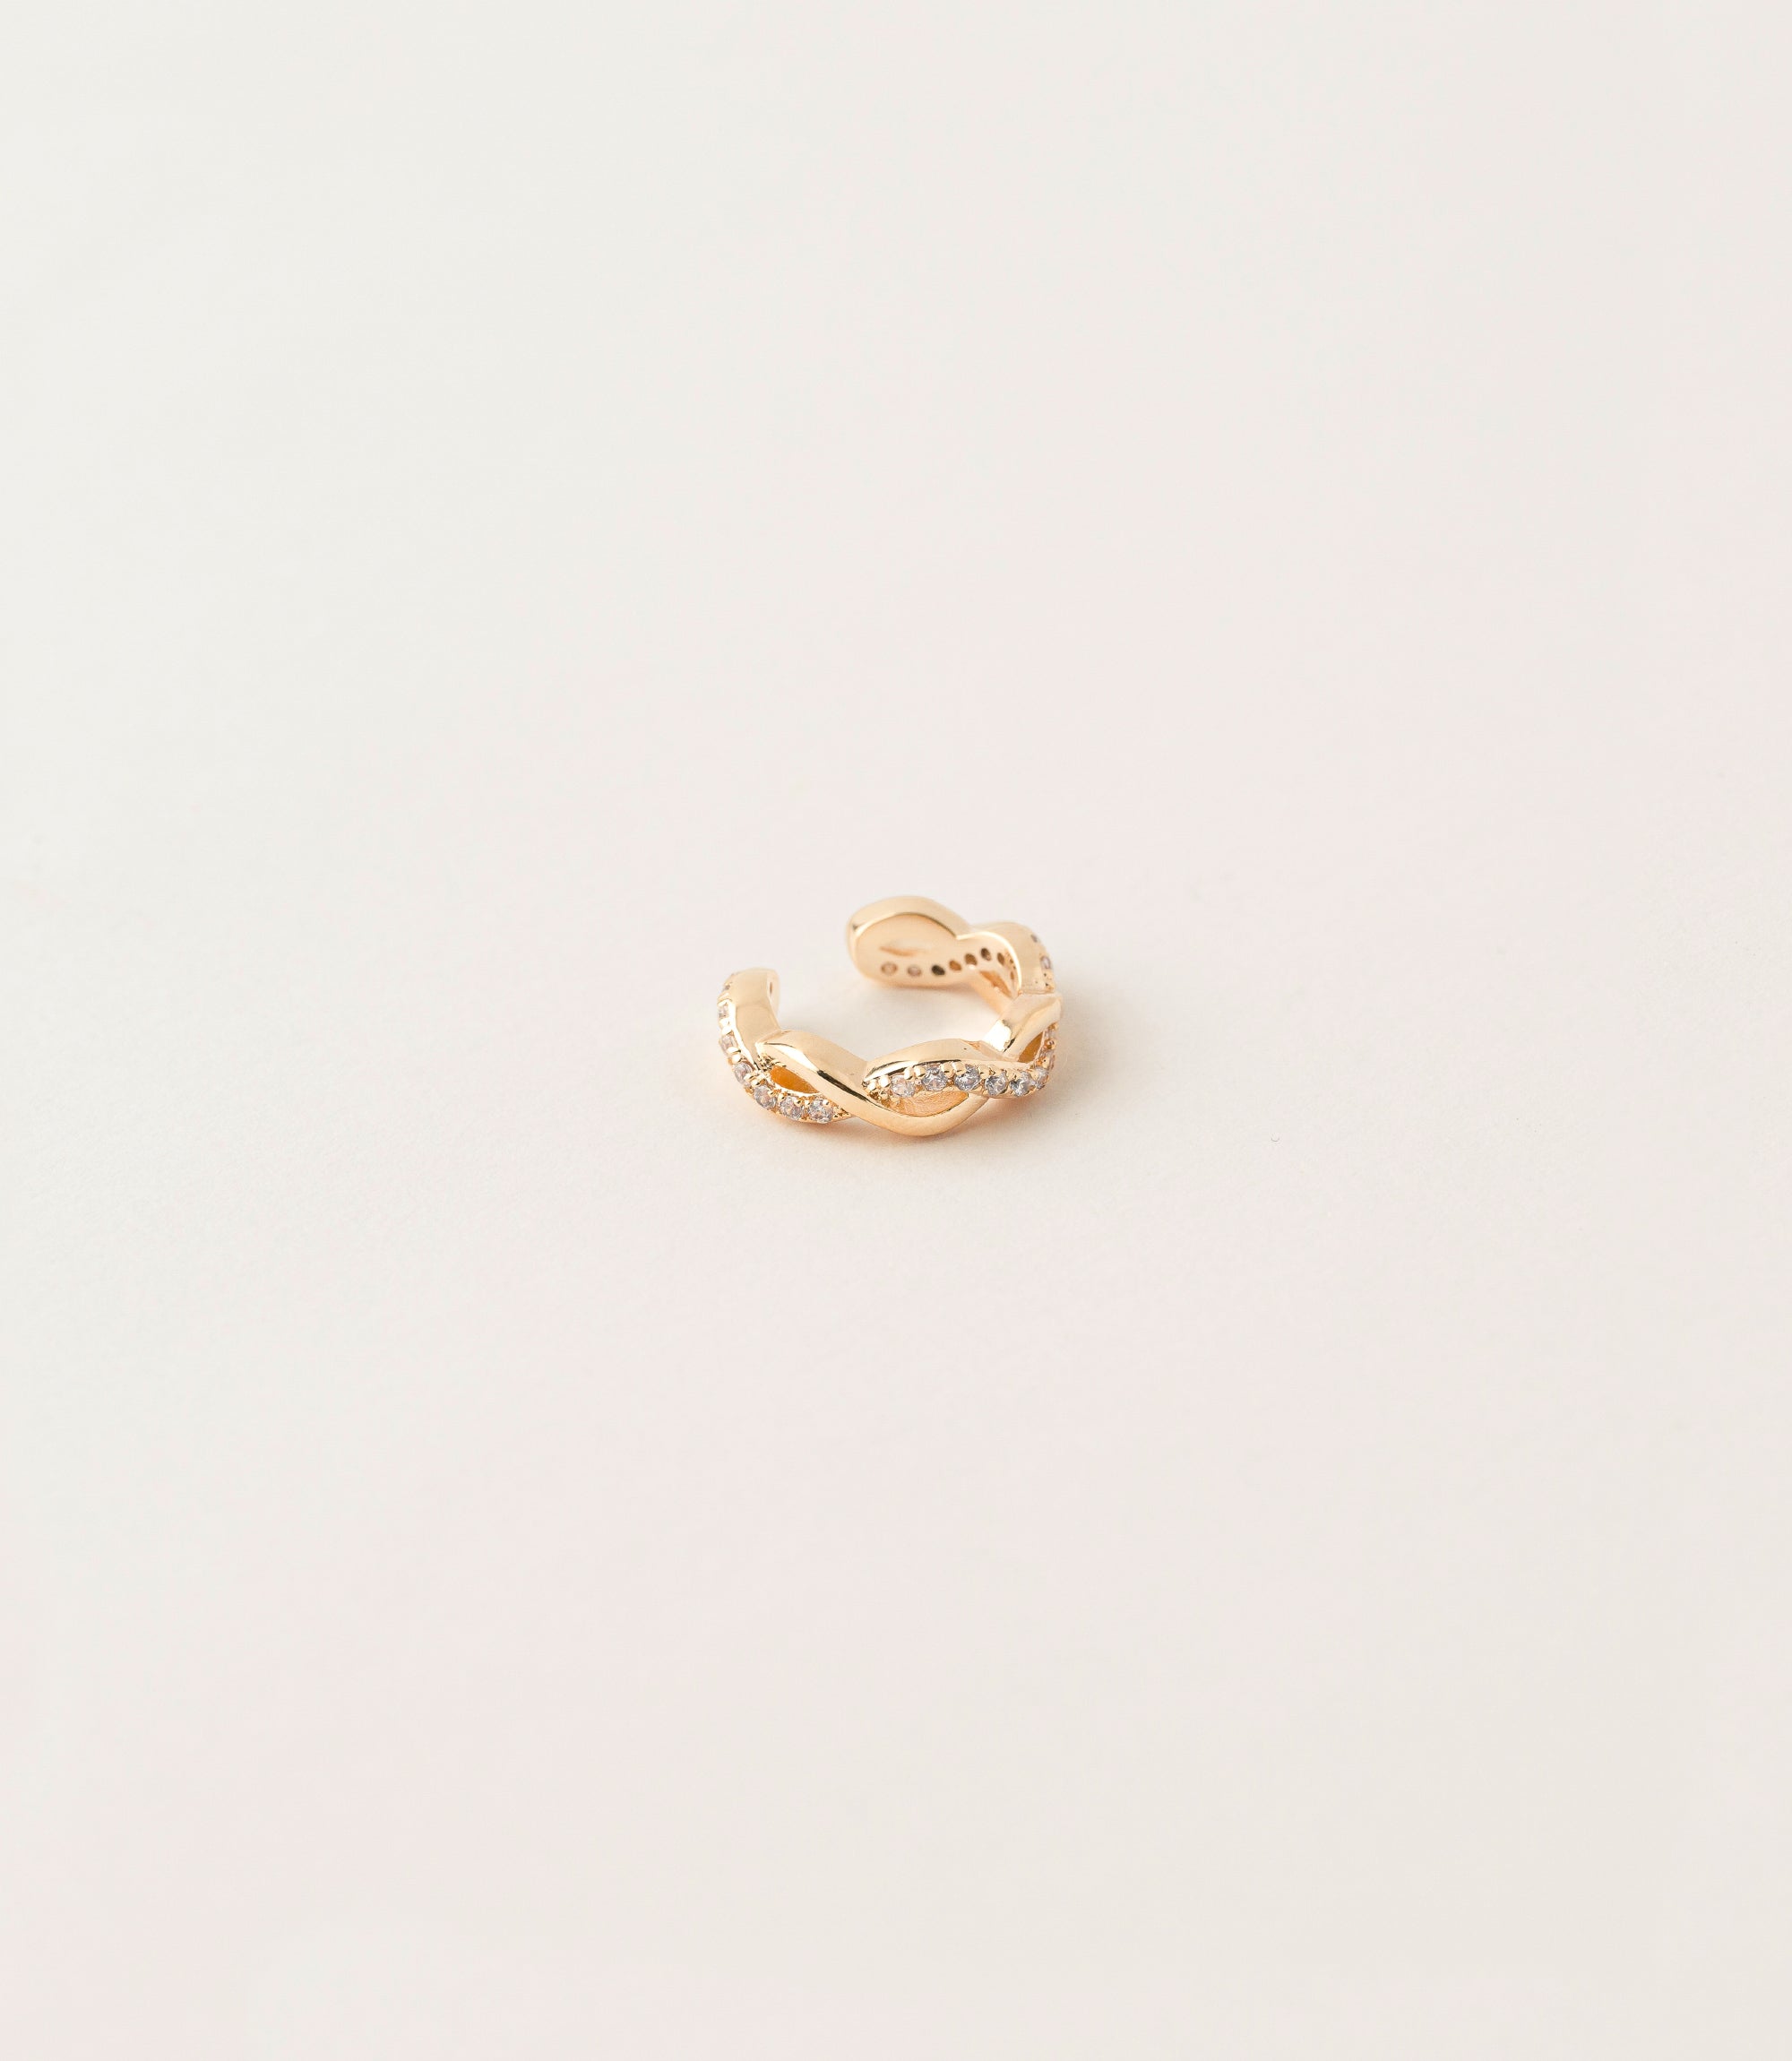 Napoli ear ring